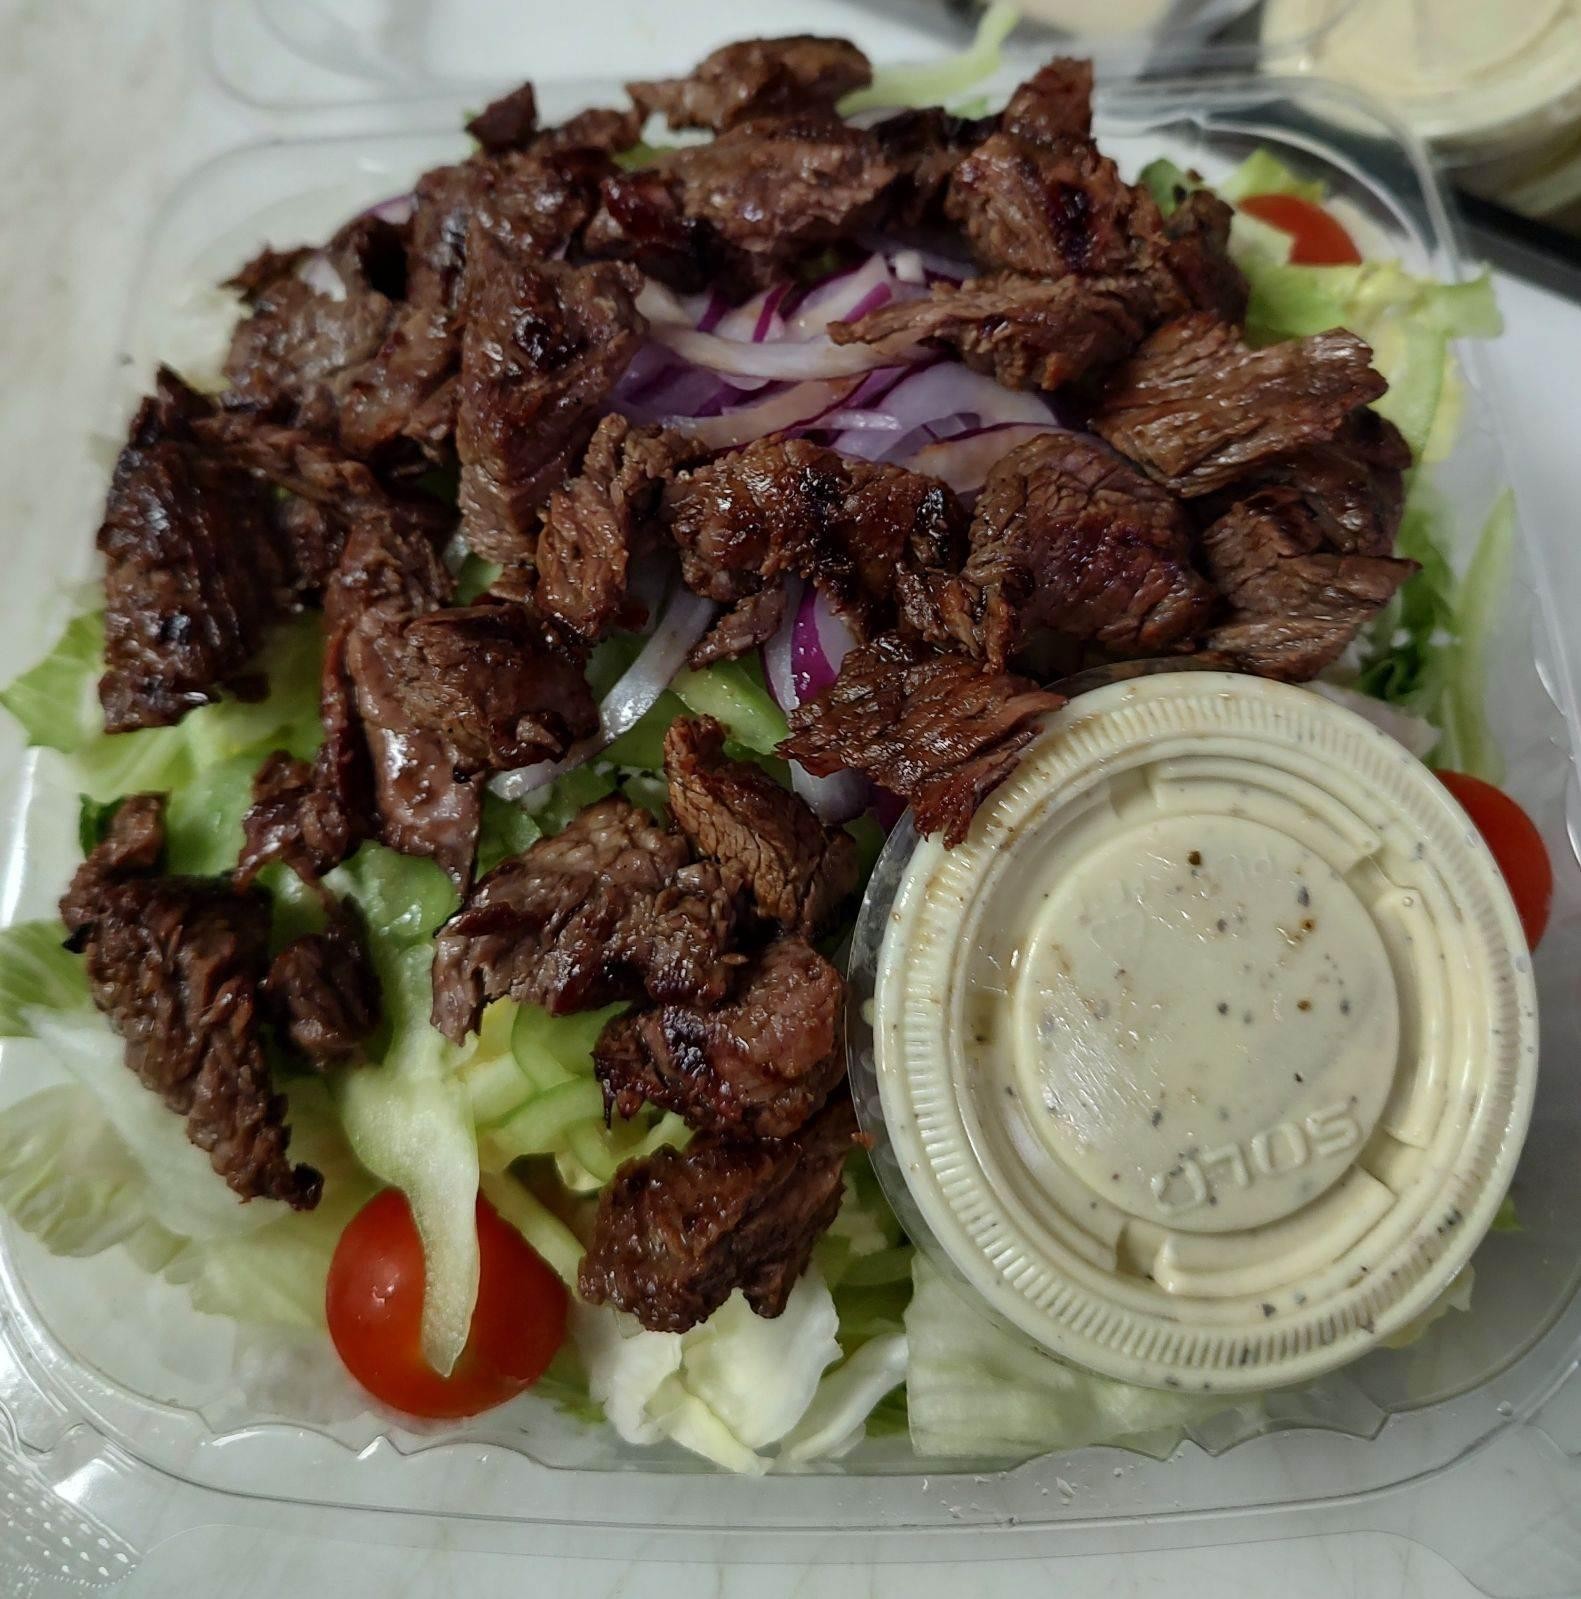 Salad with Steak Tip